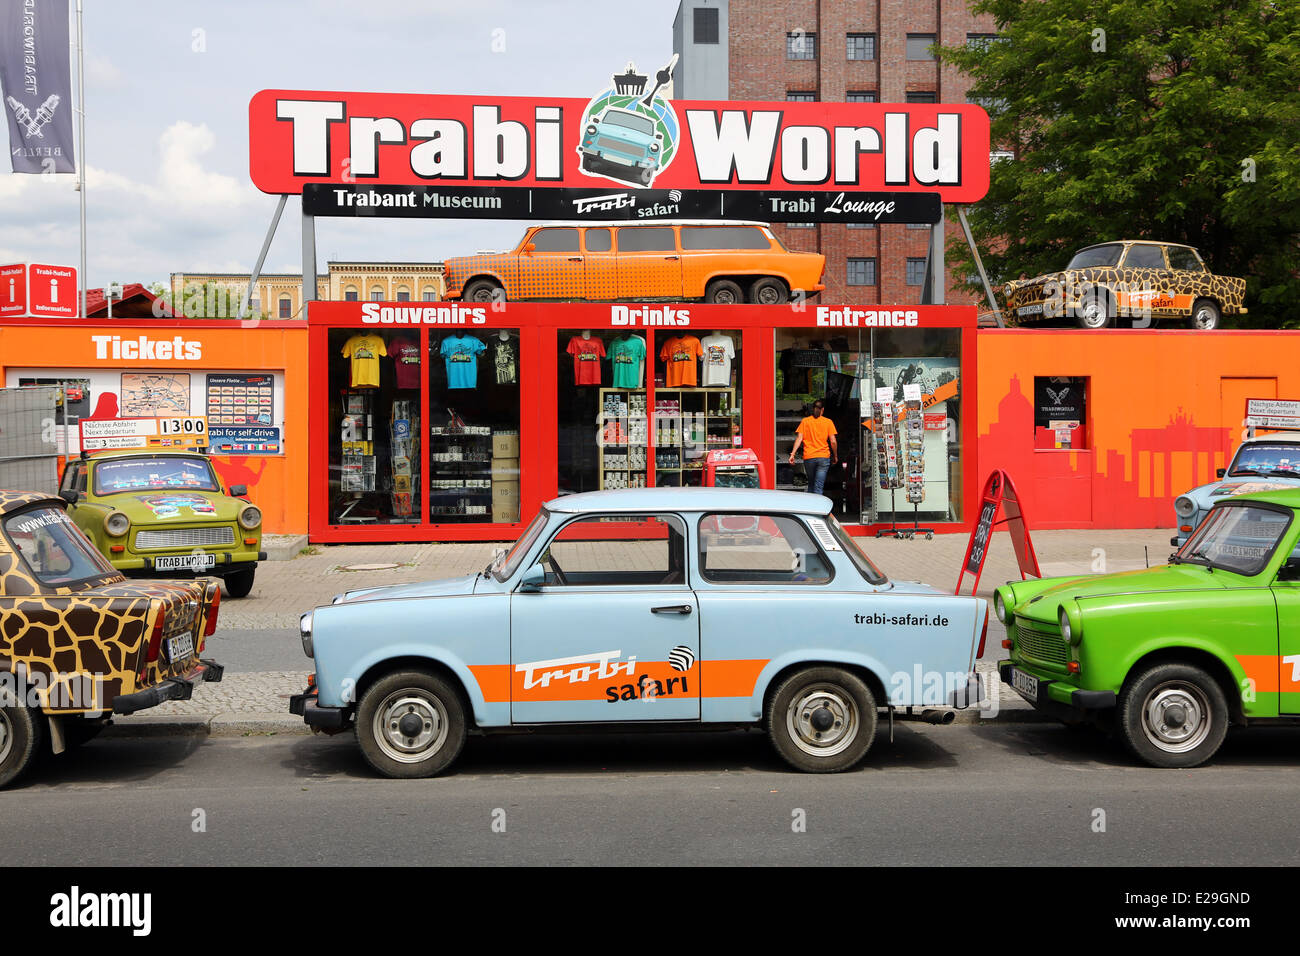 Trabant Trabi World Car Museum und Safari in Berlin, Deutschland  Stockfotografie - Alamy